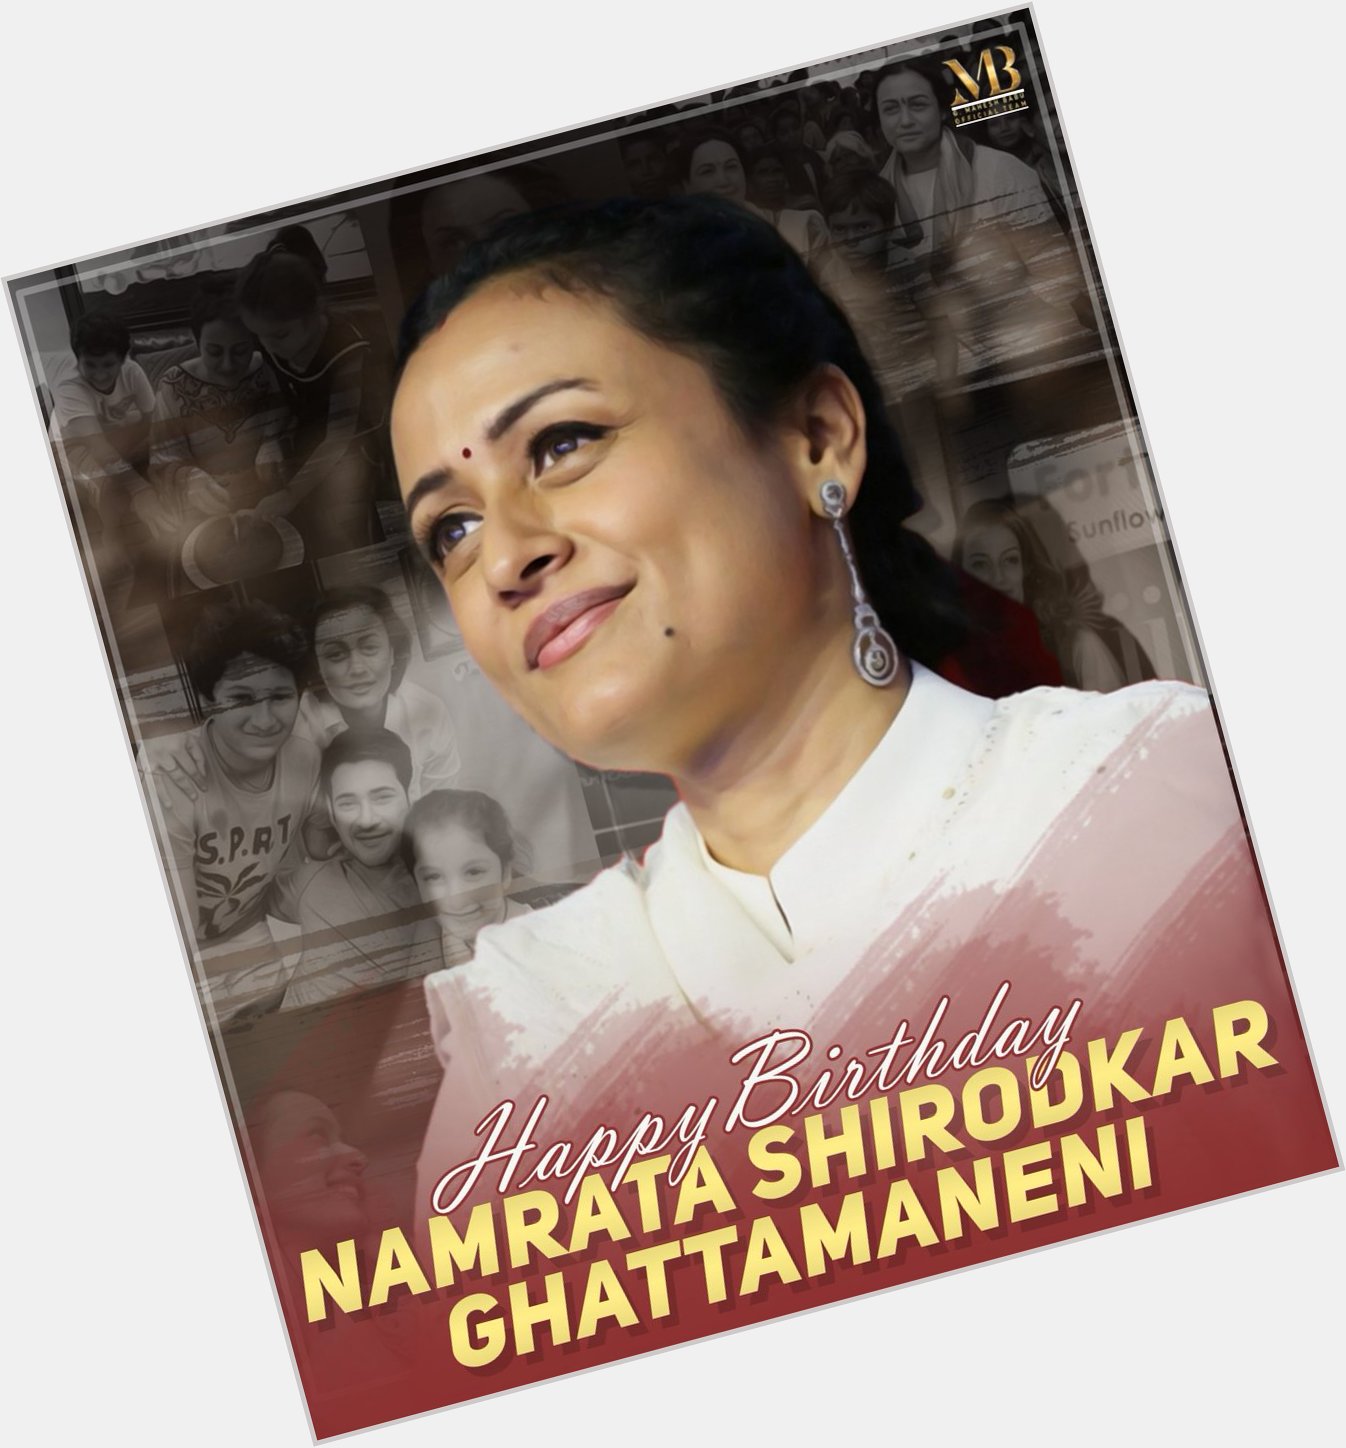 Wishing the Most Beautiful Namrata Shirodkar Ghattamaneni garu a very Happy Birthday :) 